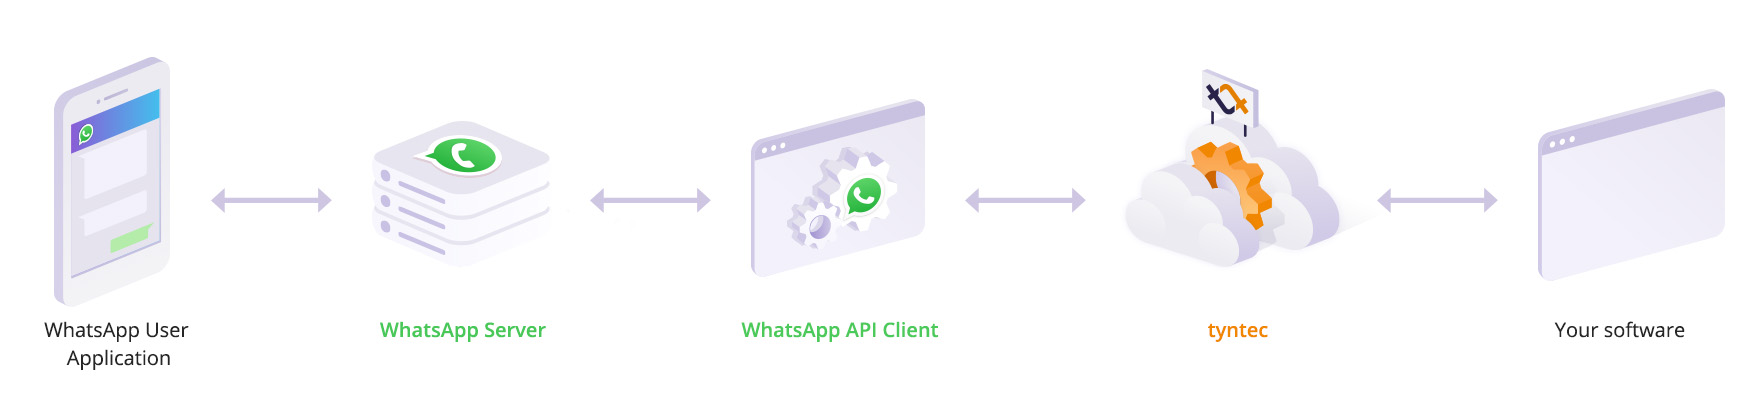 whatsapp-architecture-1_2